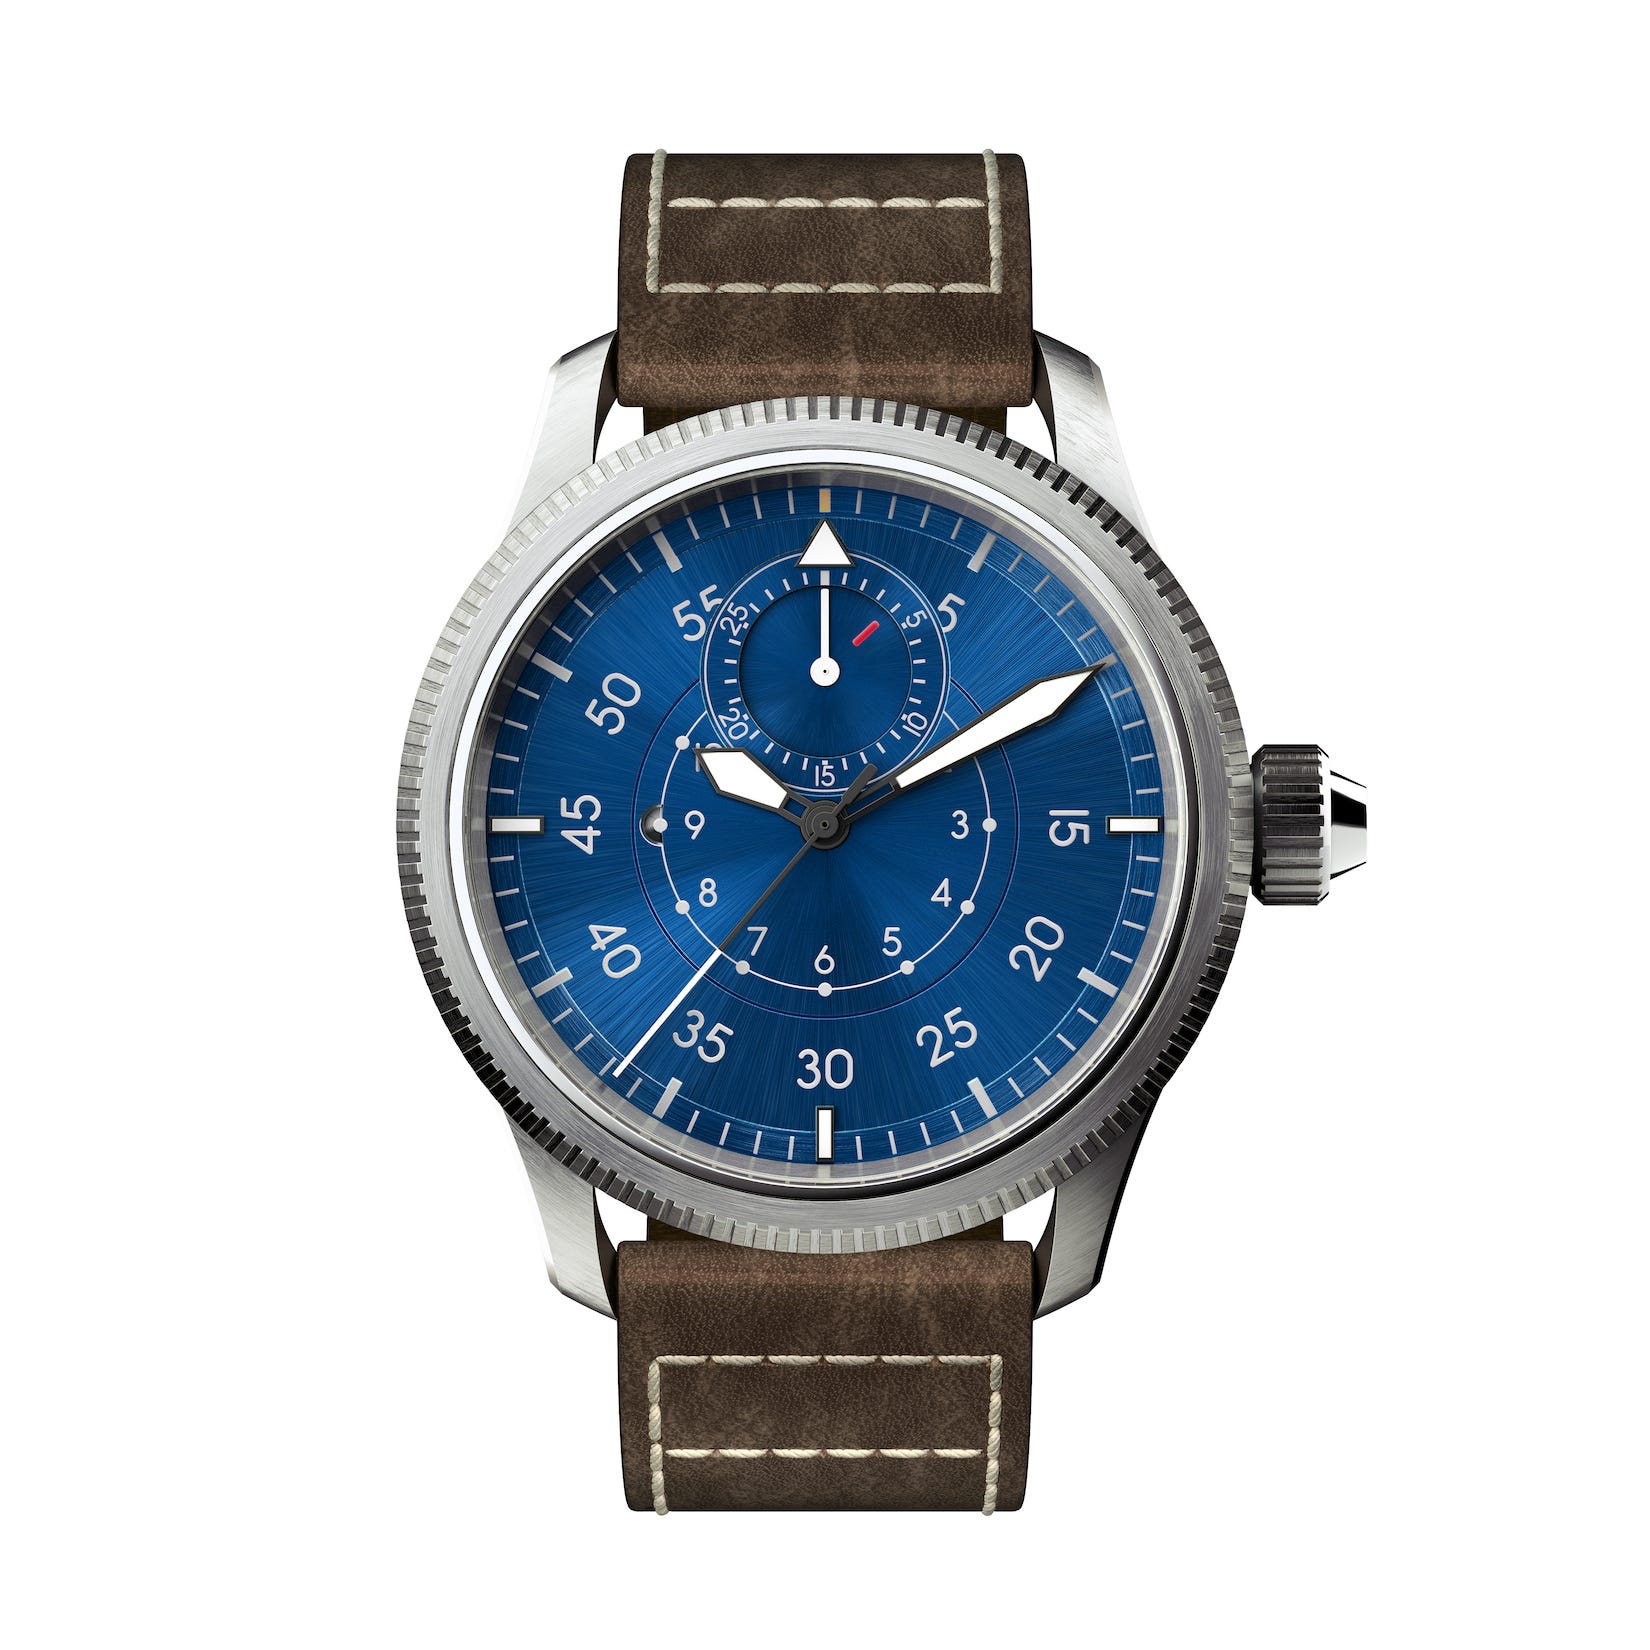 B-Uhr. A legendary watch - Watch Angels - Medium